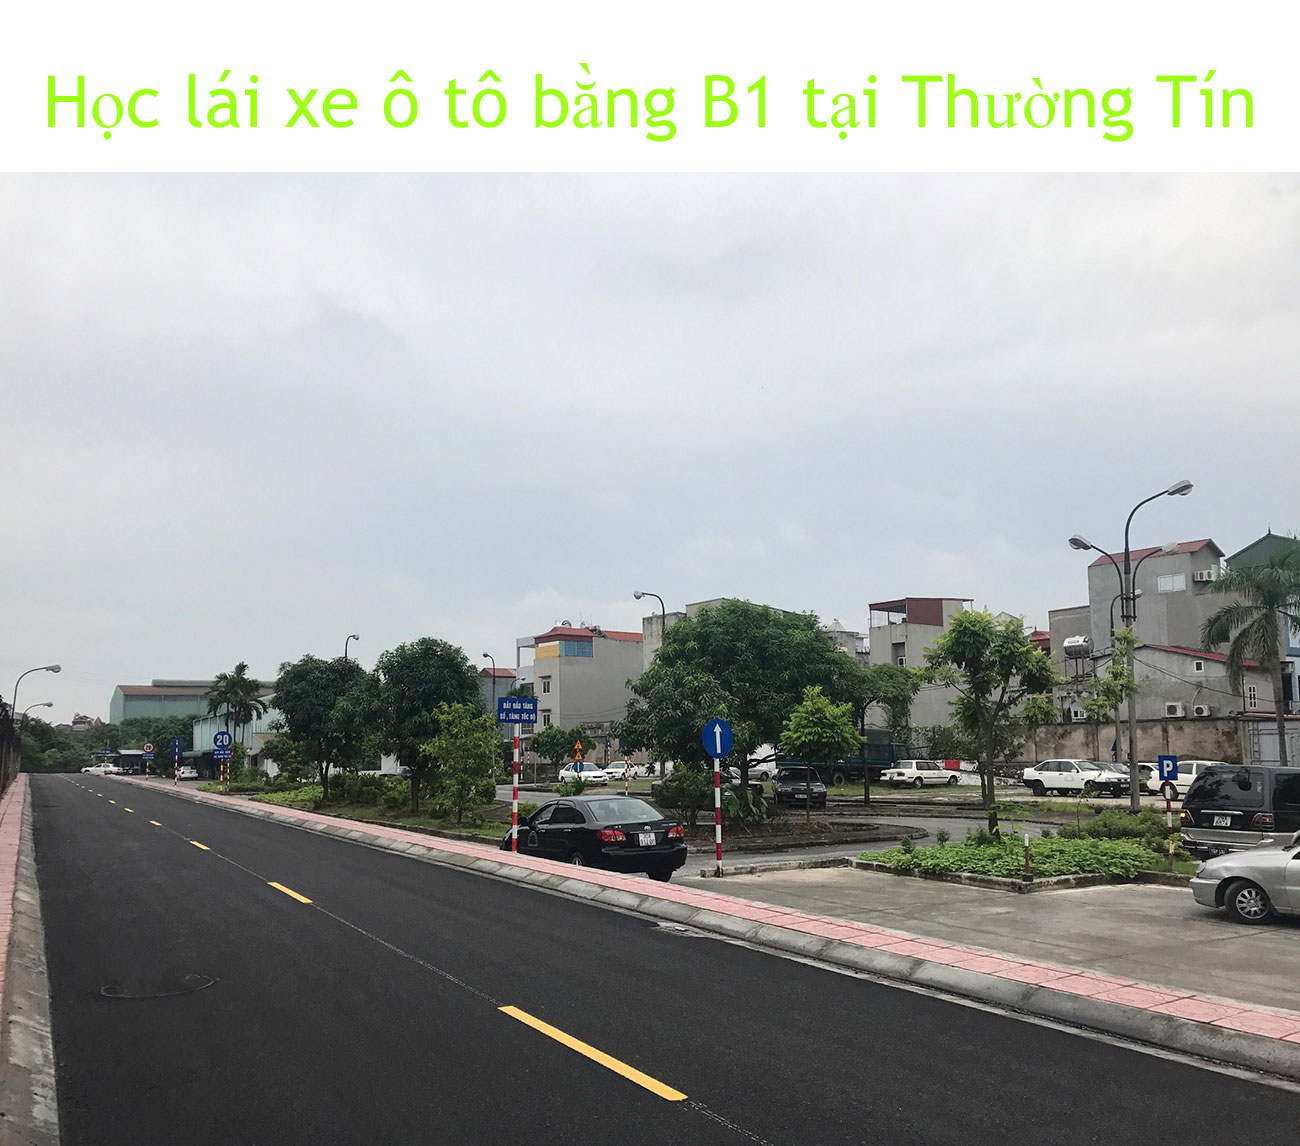 Hoc Lai Xe O To B1 Tai Thuong Tin